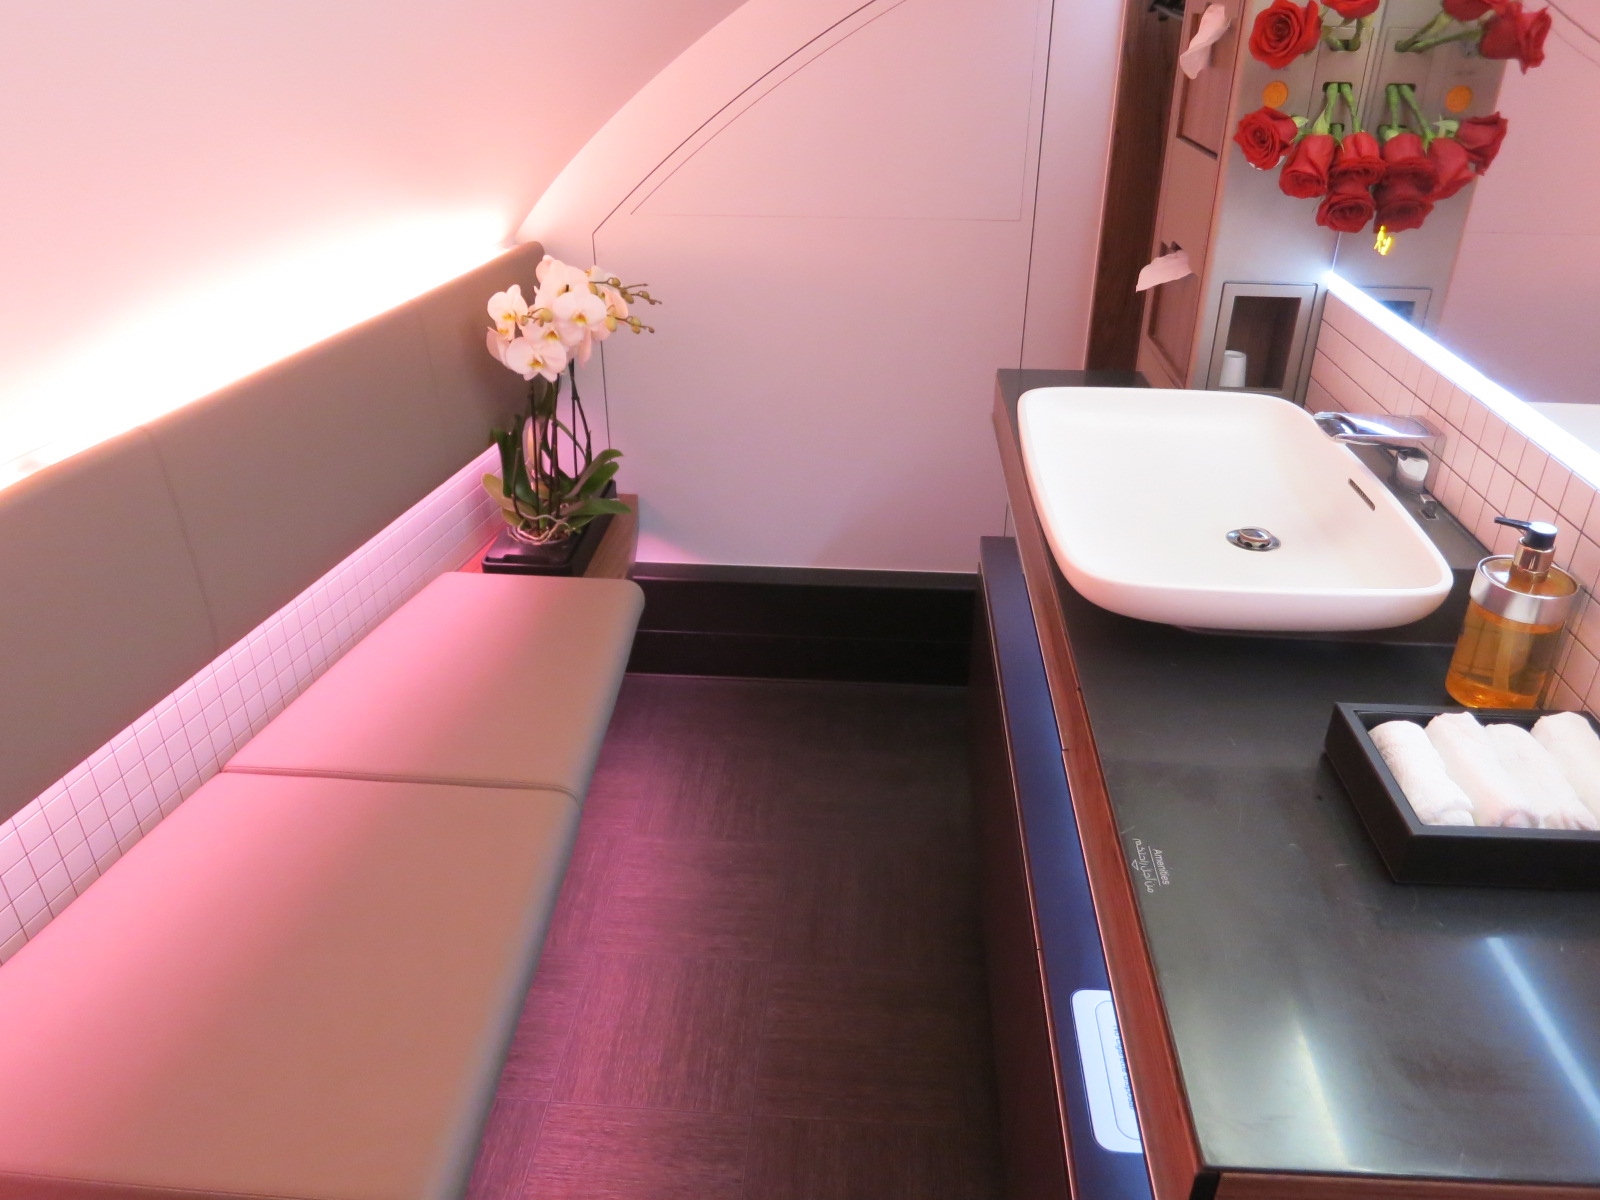 Qatar Airways A380 first class bathroom Bangkok-Doha 